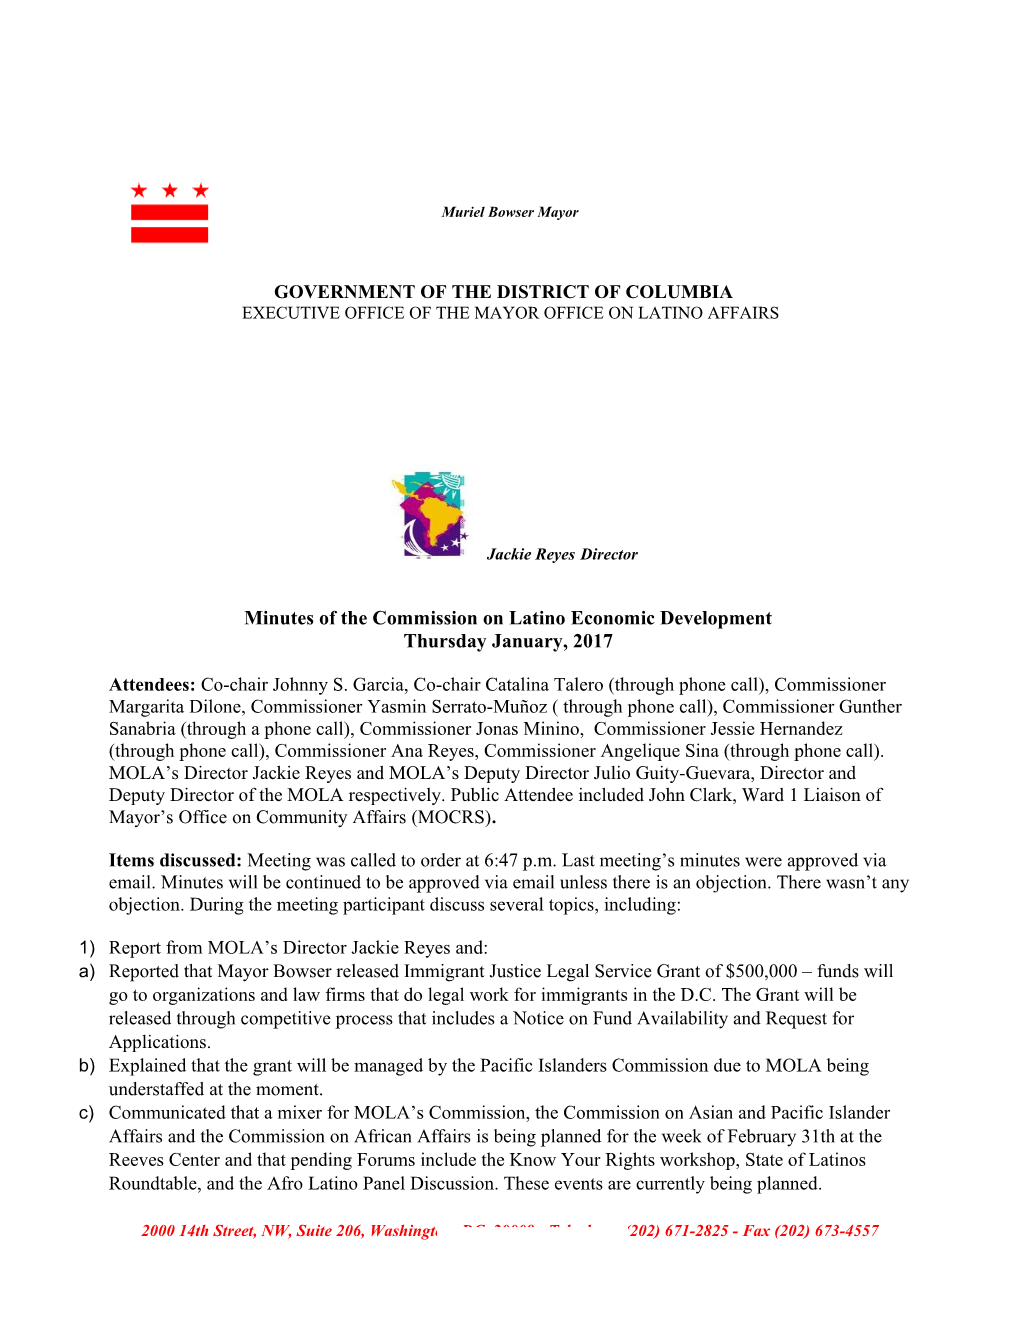 Minutes of the Commission on Latino Economic Development